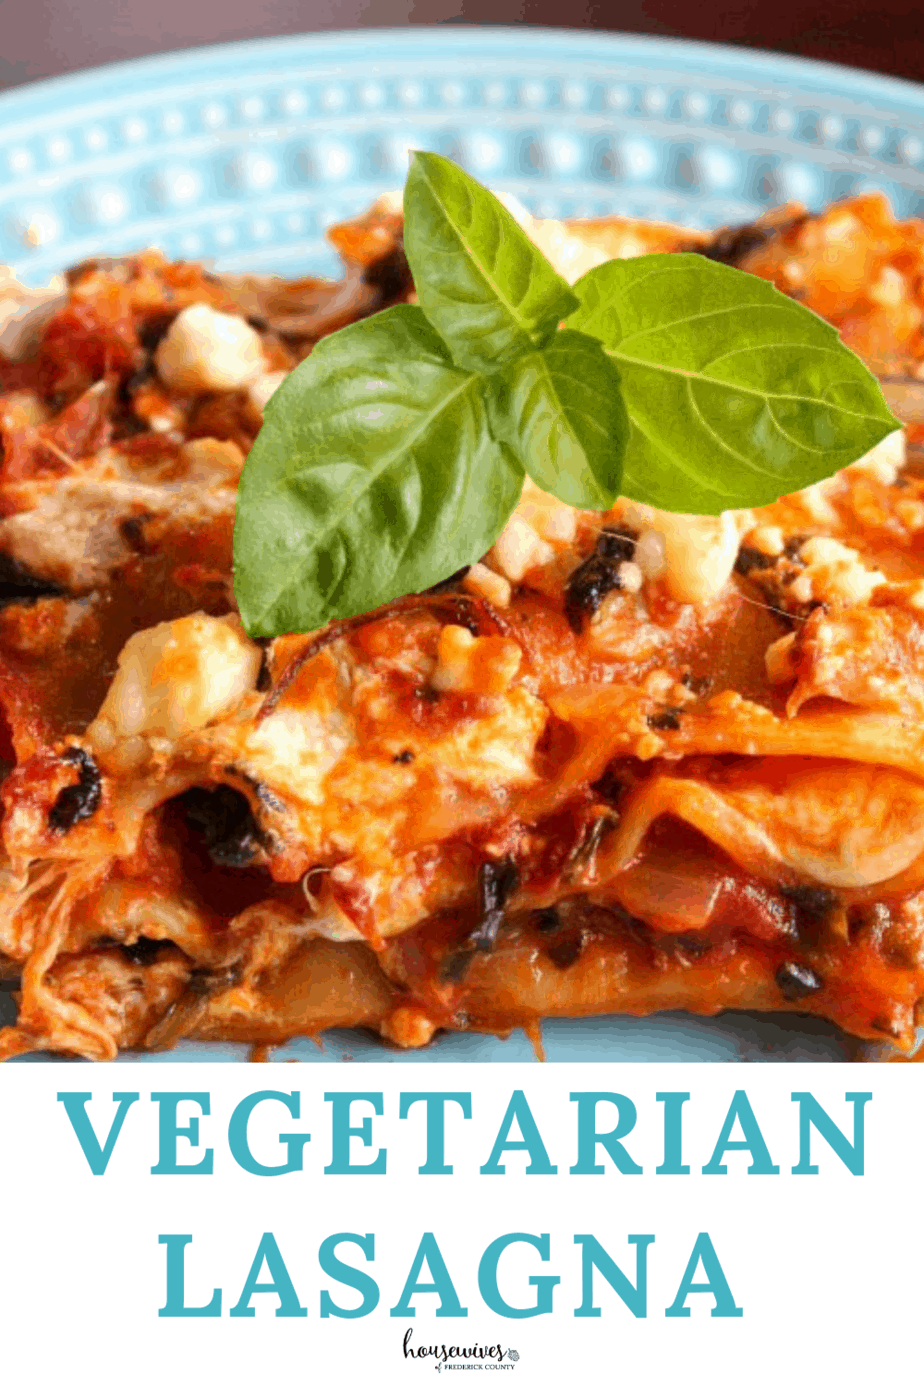 Vegetarian Lasagna Recipe with Spinach & Artichokes